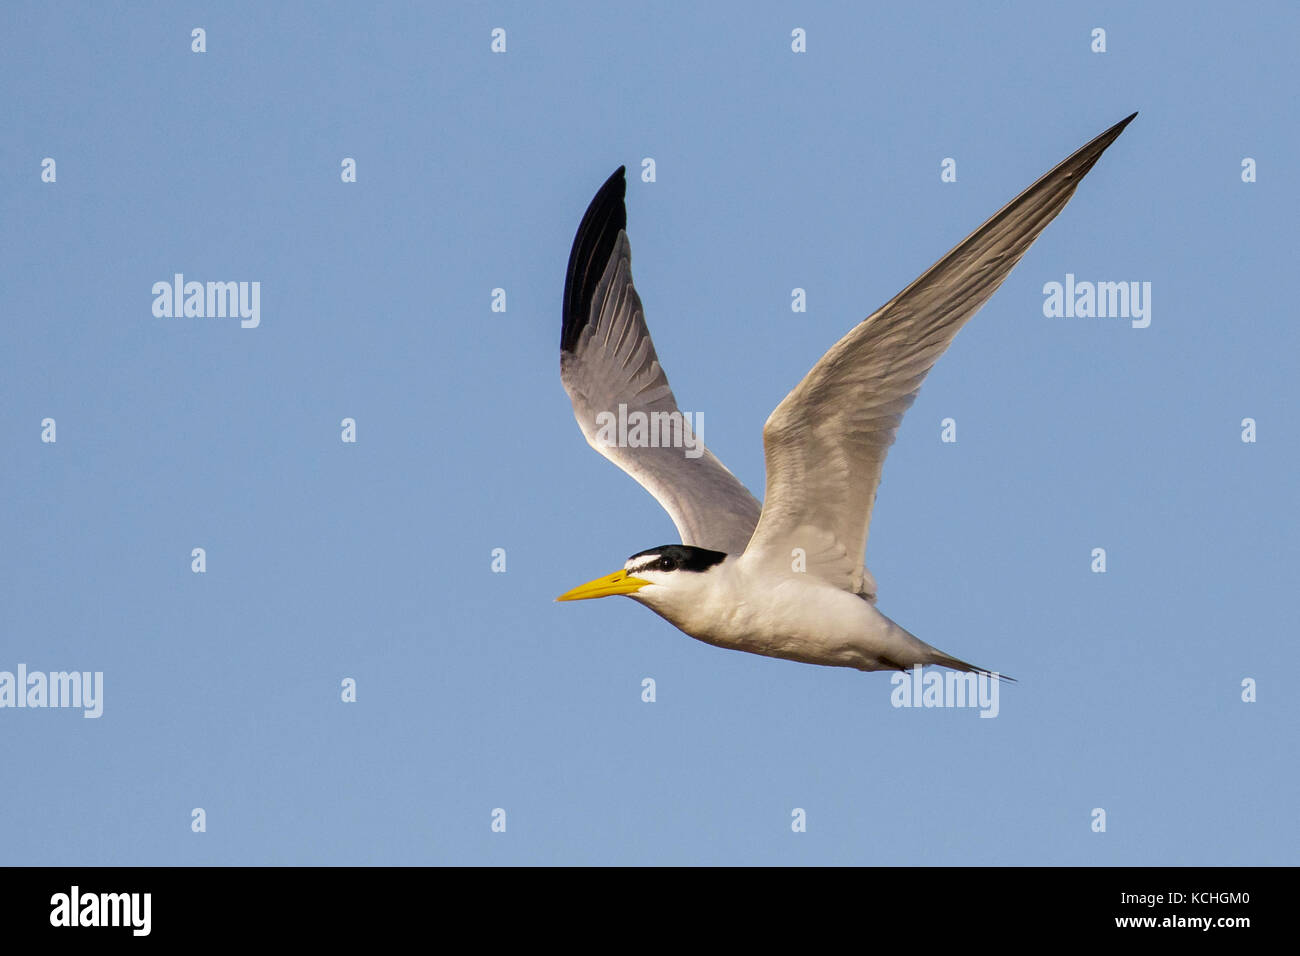 Yellow-billed Tern (Sternula superciliaris) flying in the Pantanal region of Brazil. Stock Photo